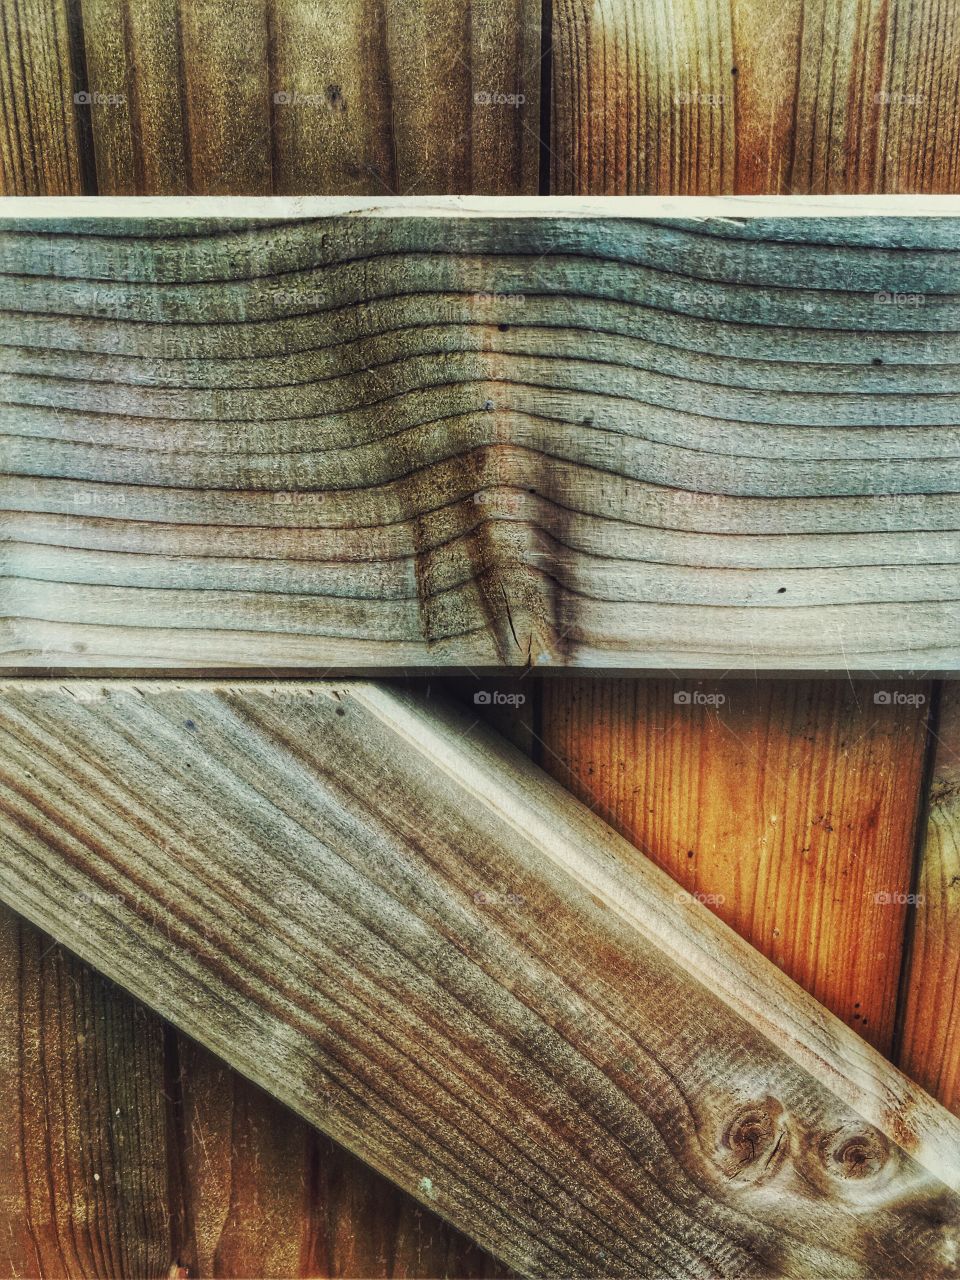 Wooden gate detail